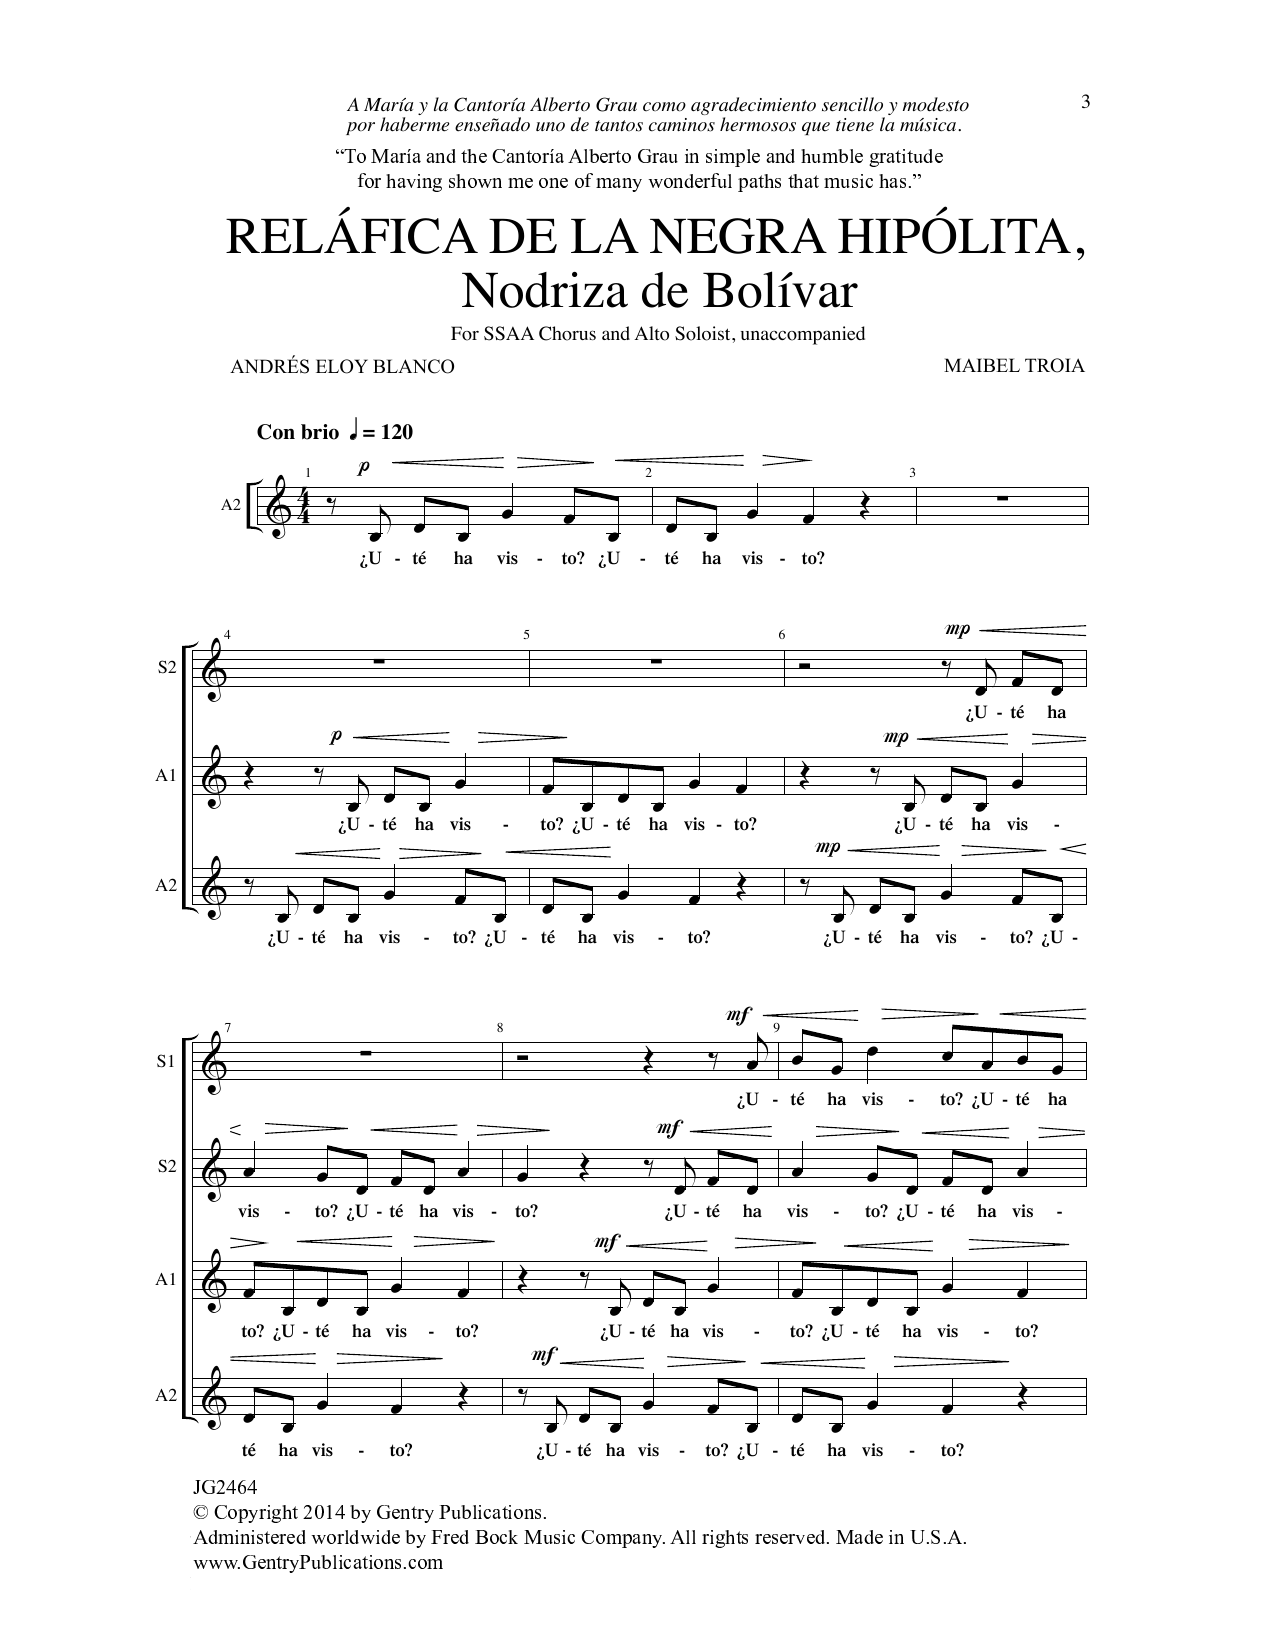 Andres Eloy Blanco Relafica De La Negra Hipolita Sheet Music Notes & Chords for Choral - Download or Print PDF